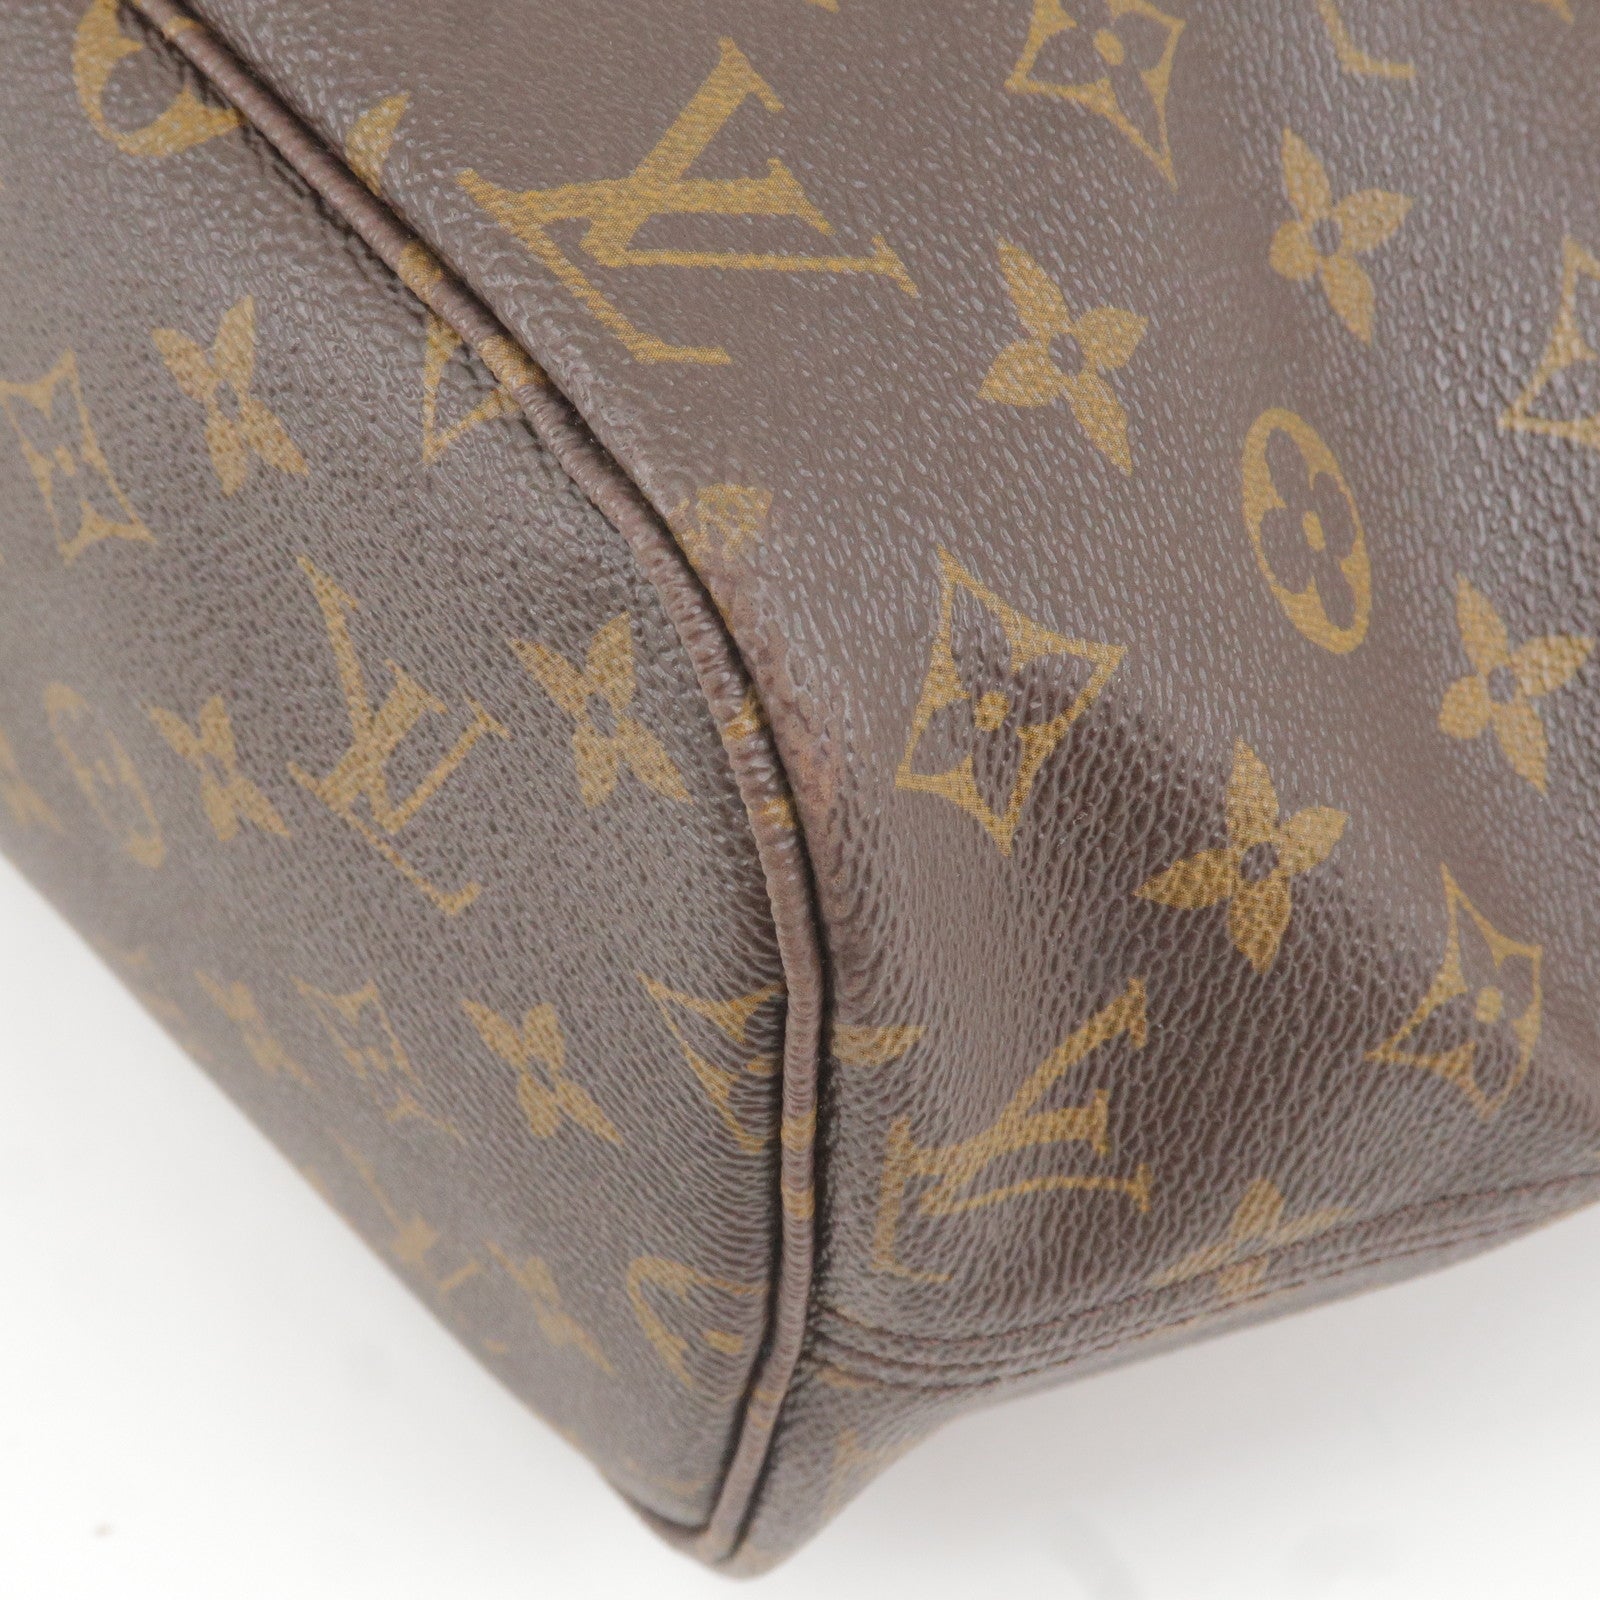 Bag - owned debossed monogram wallet - Neverfull - Vuitton